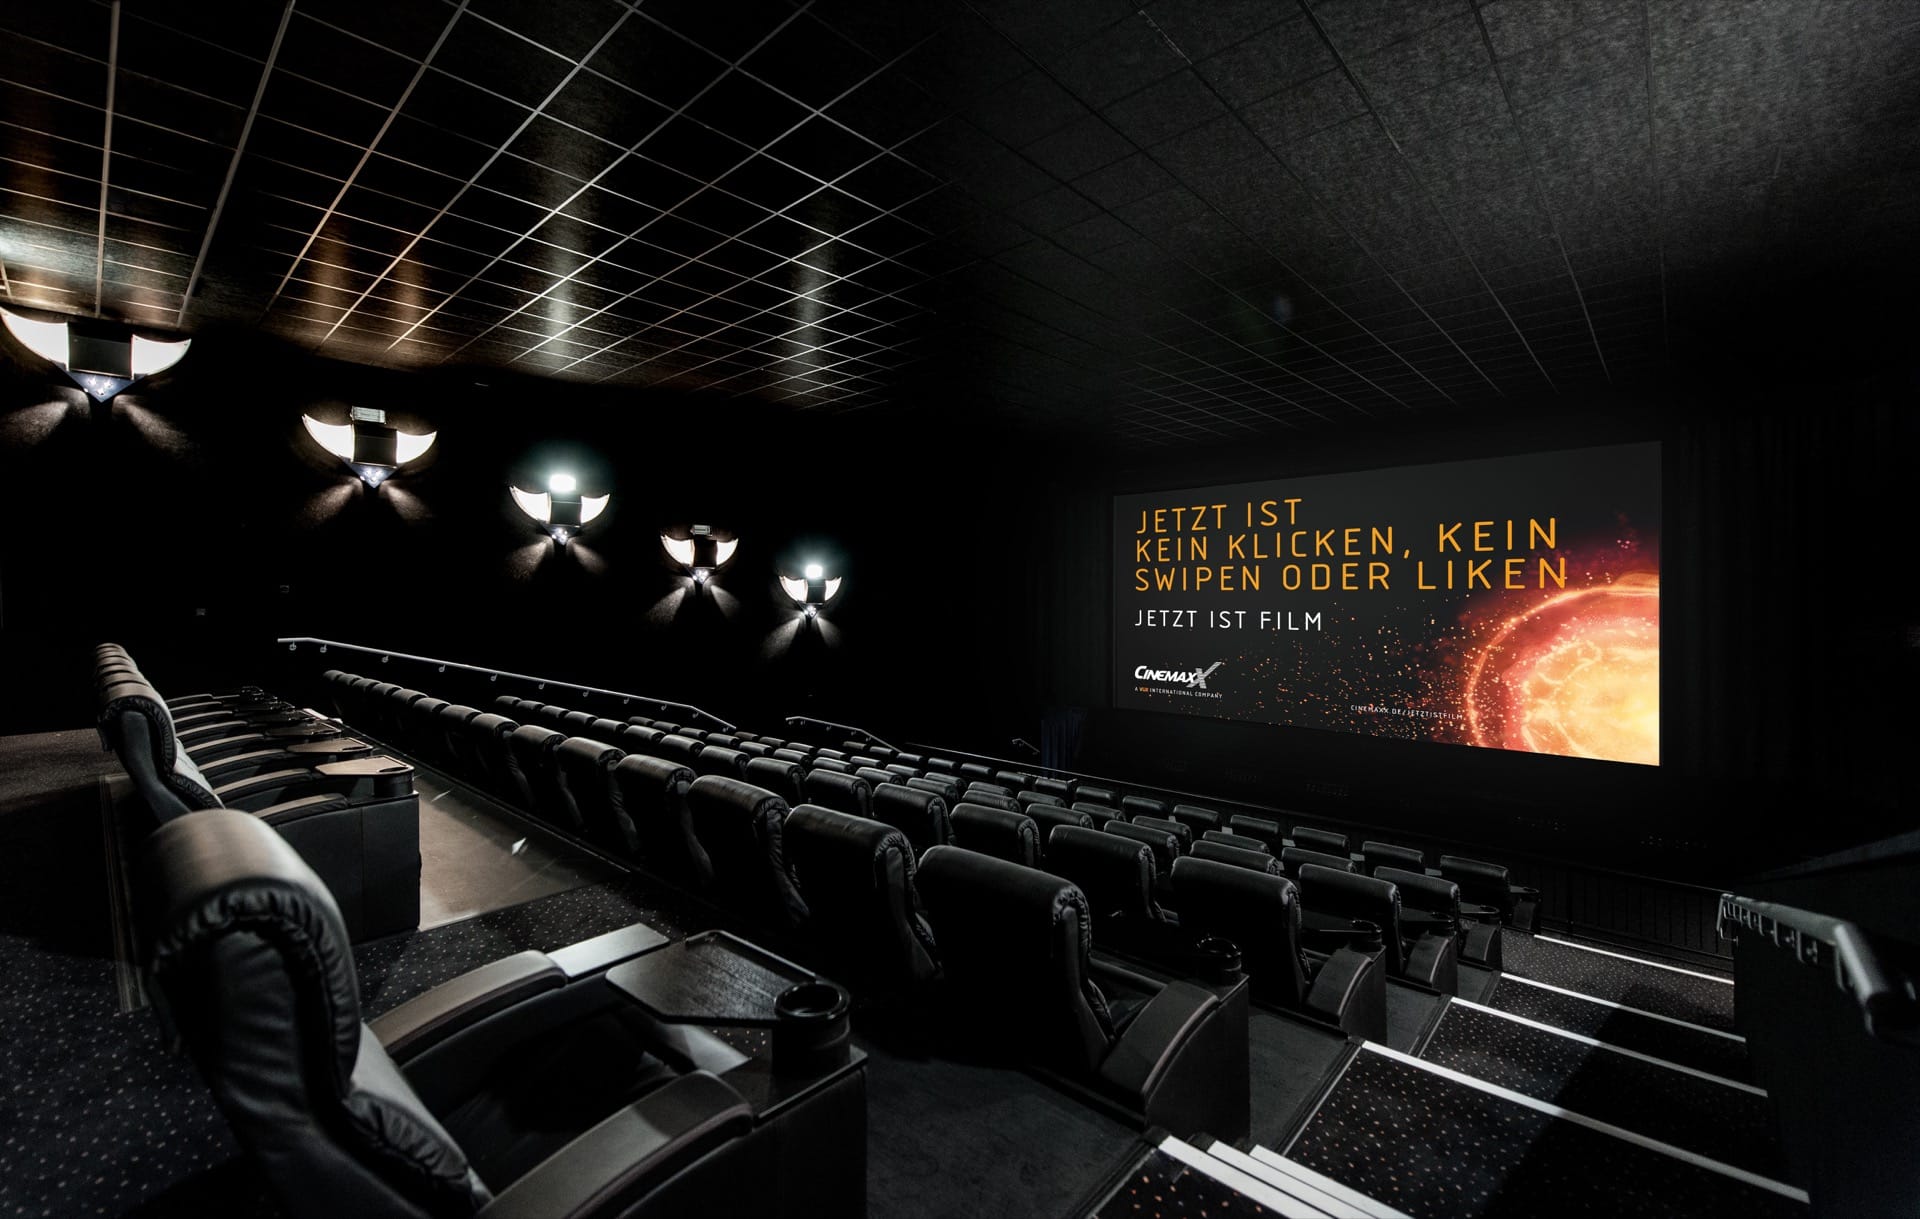 CinemaxX_JETZT IST FILM_Saal